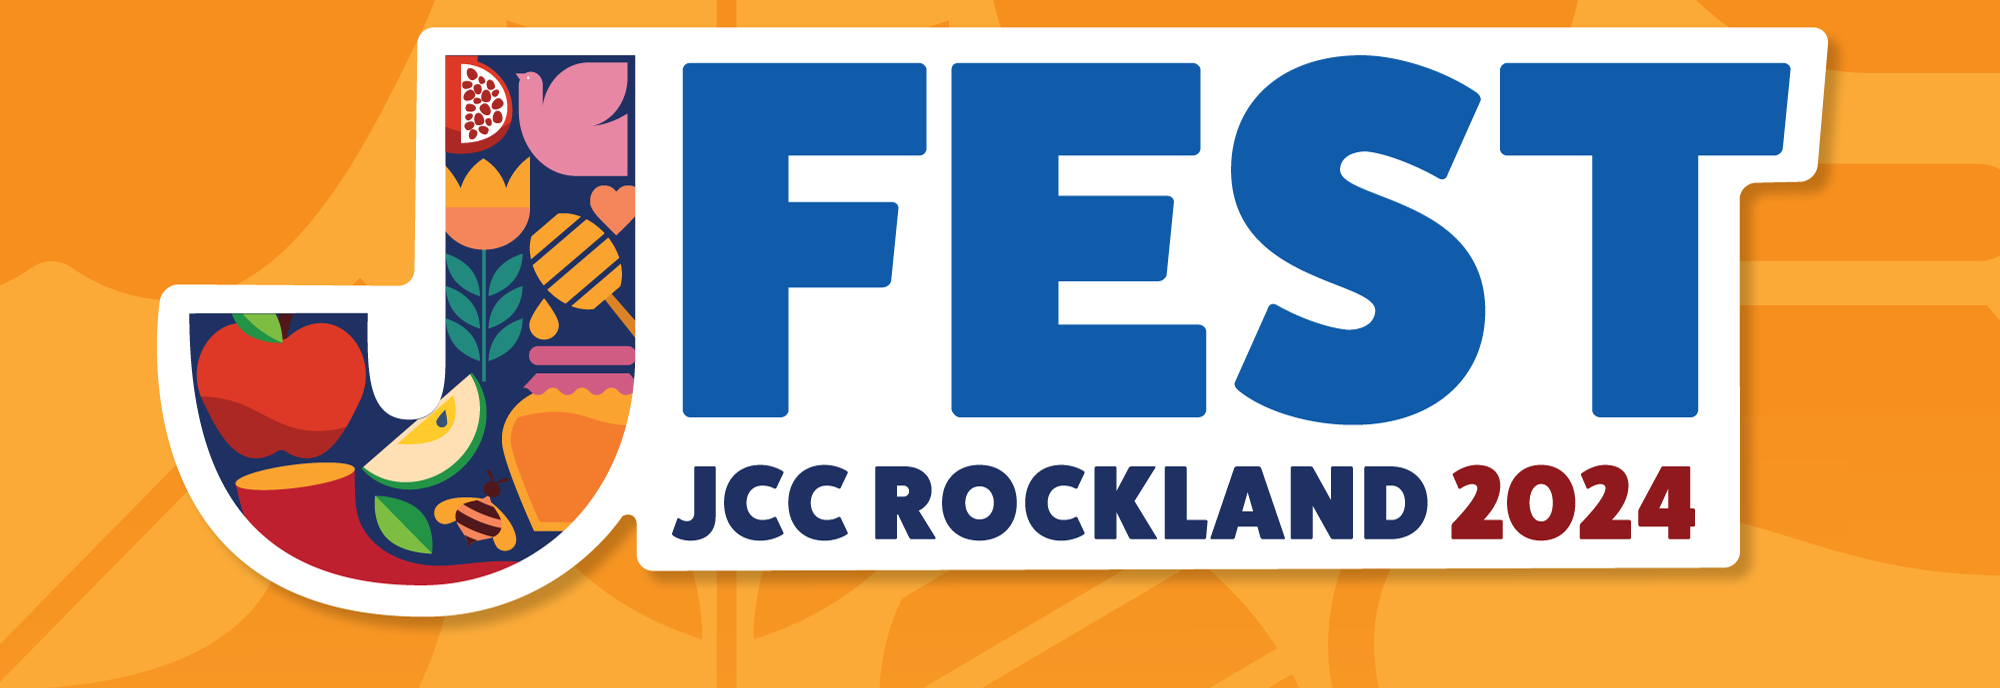 JFEST JCC ROCKLAND 2024